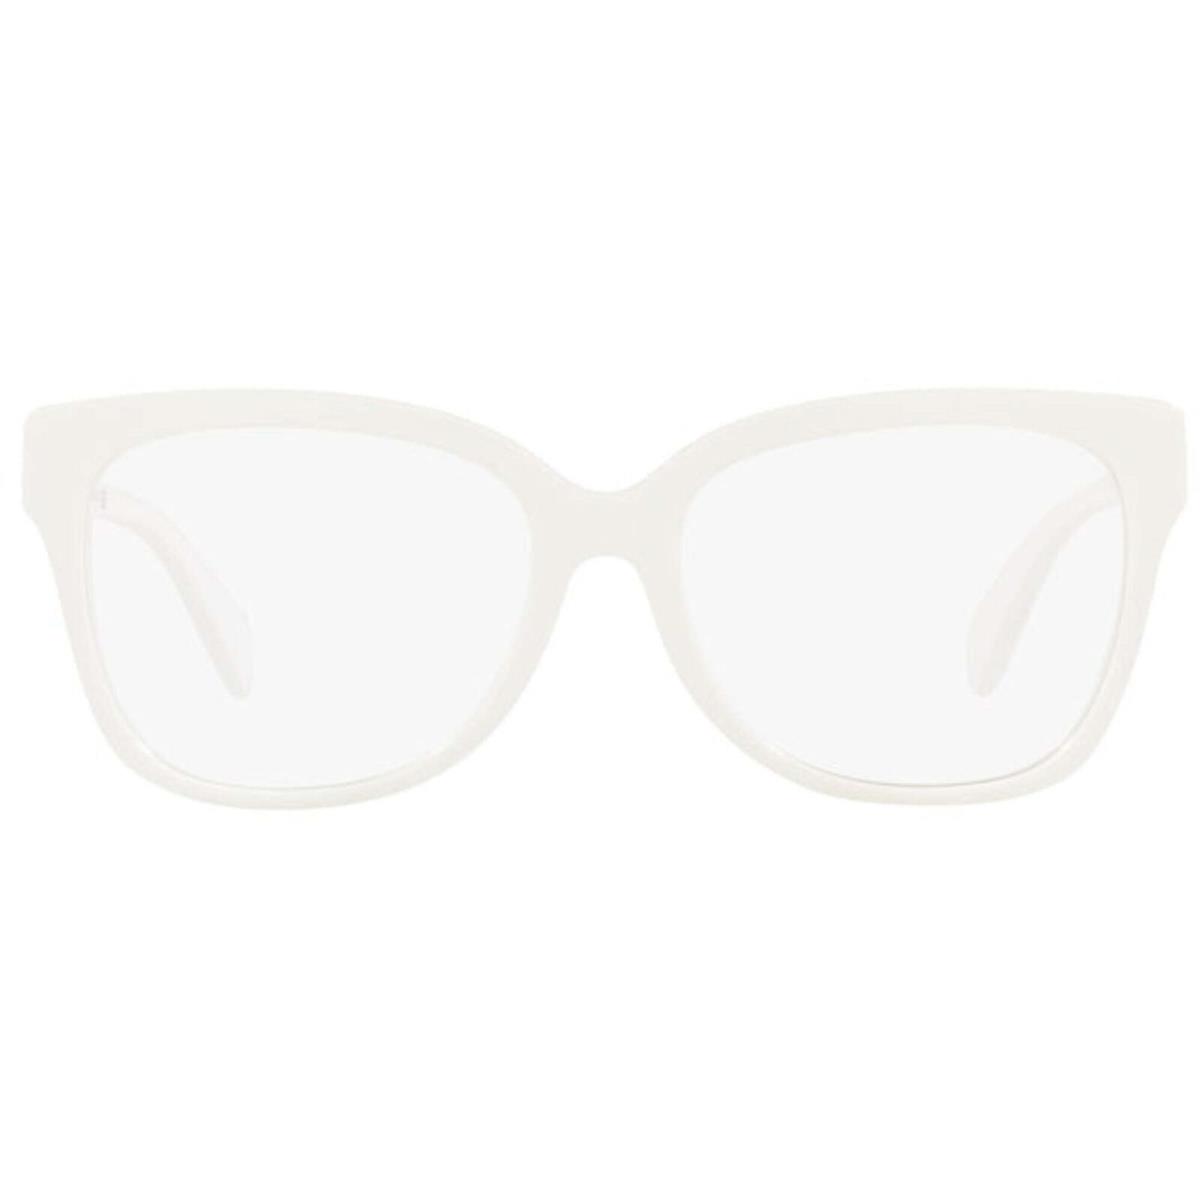 Michael Kors Women`s Eyeglasses Palawan Optic White Frame 0MK4091 3100 - Frame: Palawan Optic White